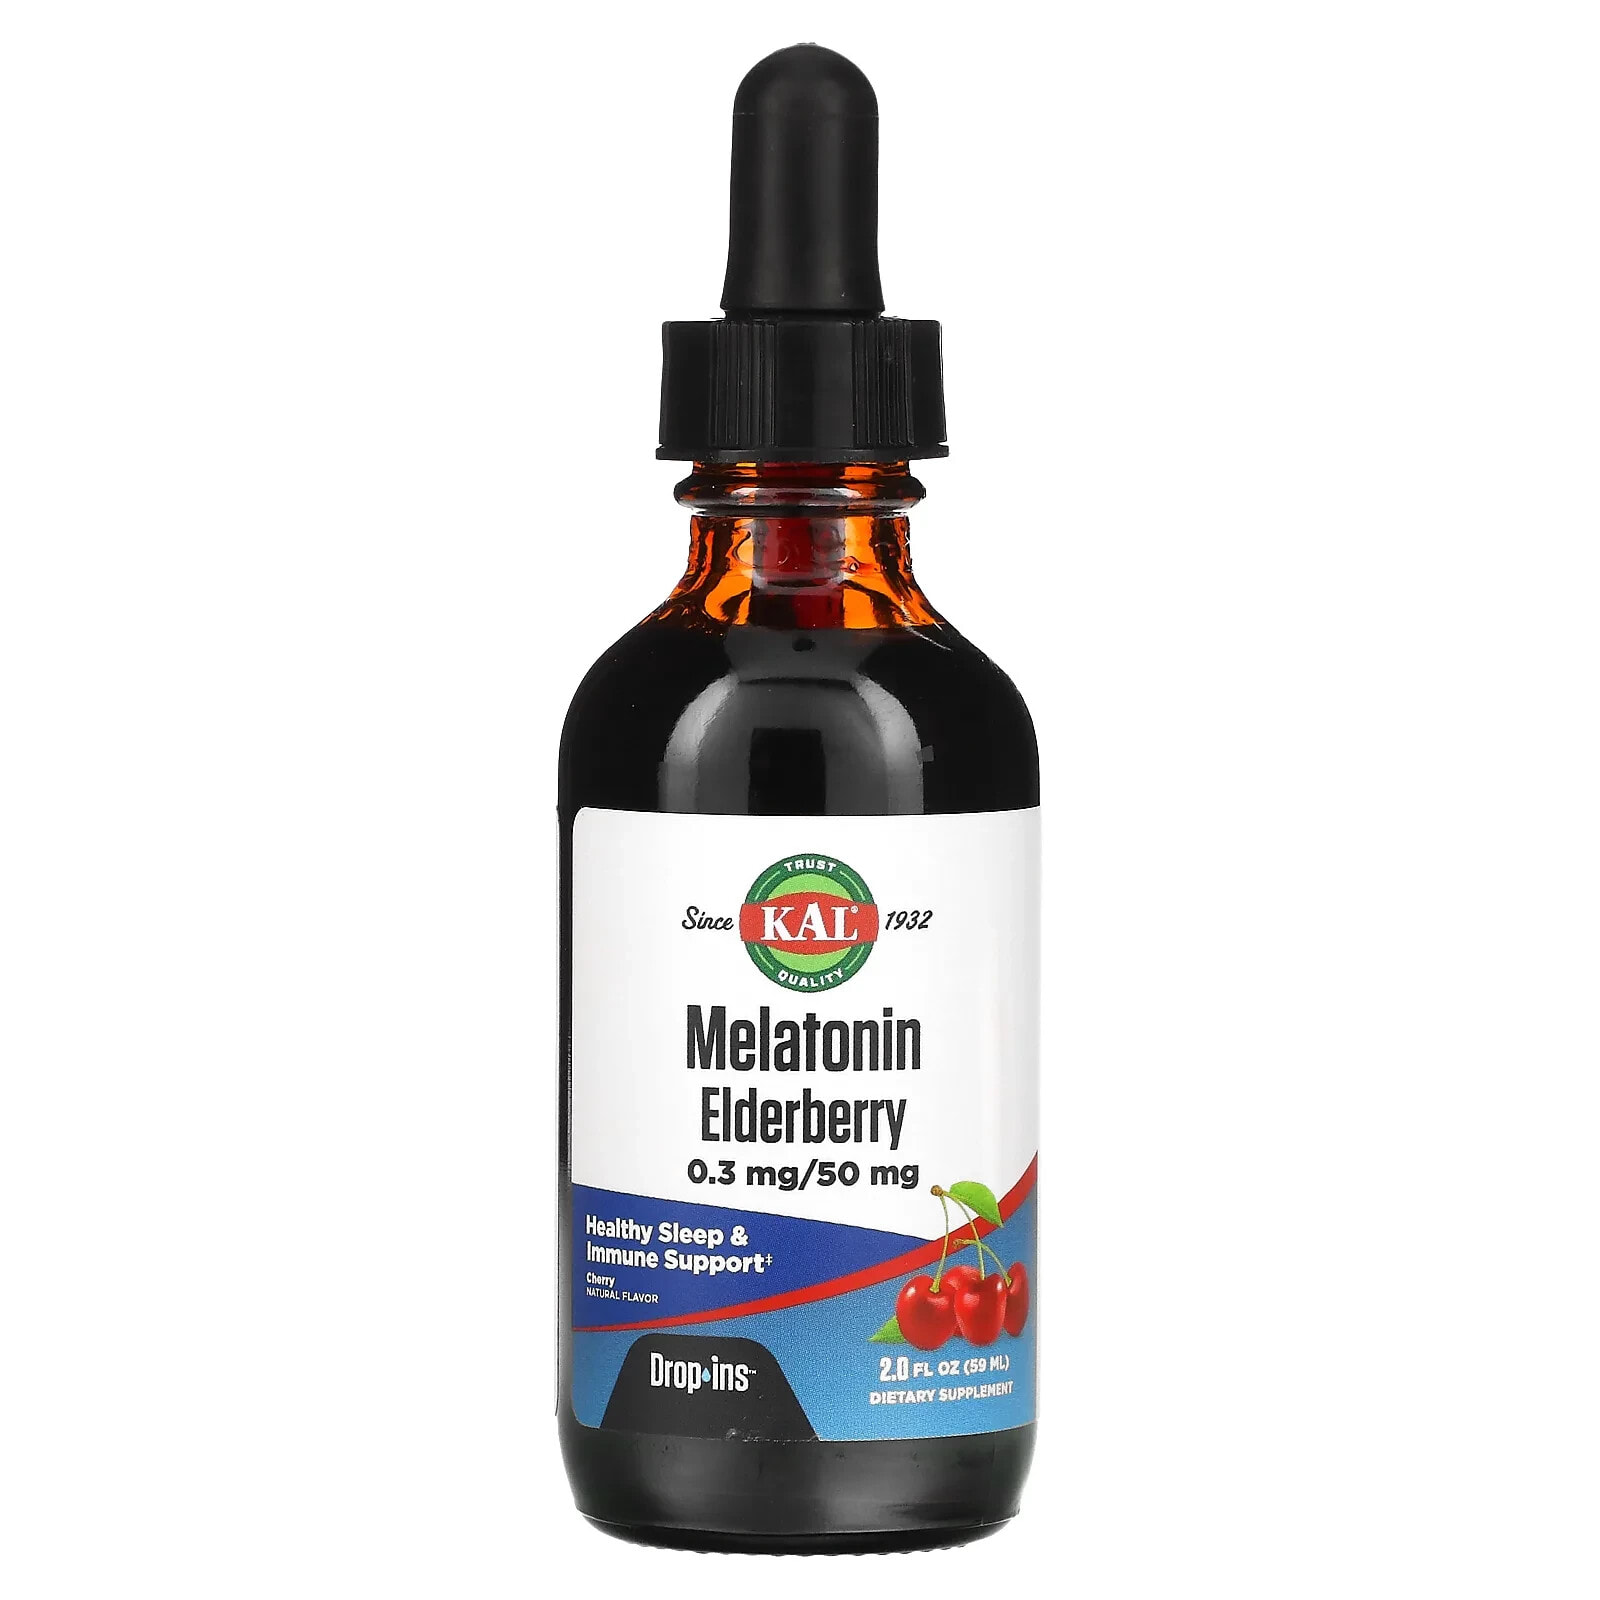 Melatonin Elderberry, Cherry, 2 fl oz (59 ml)